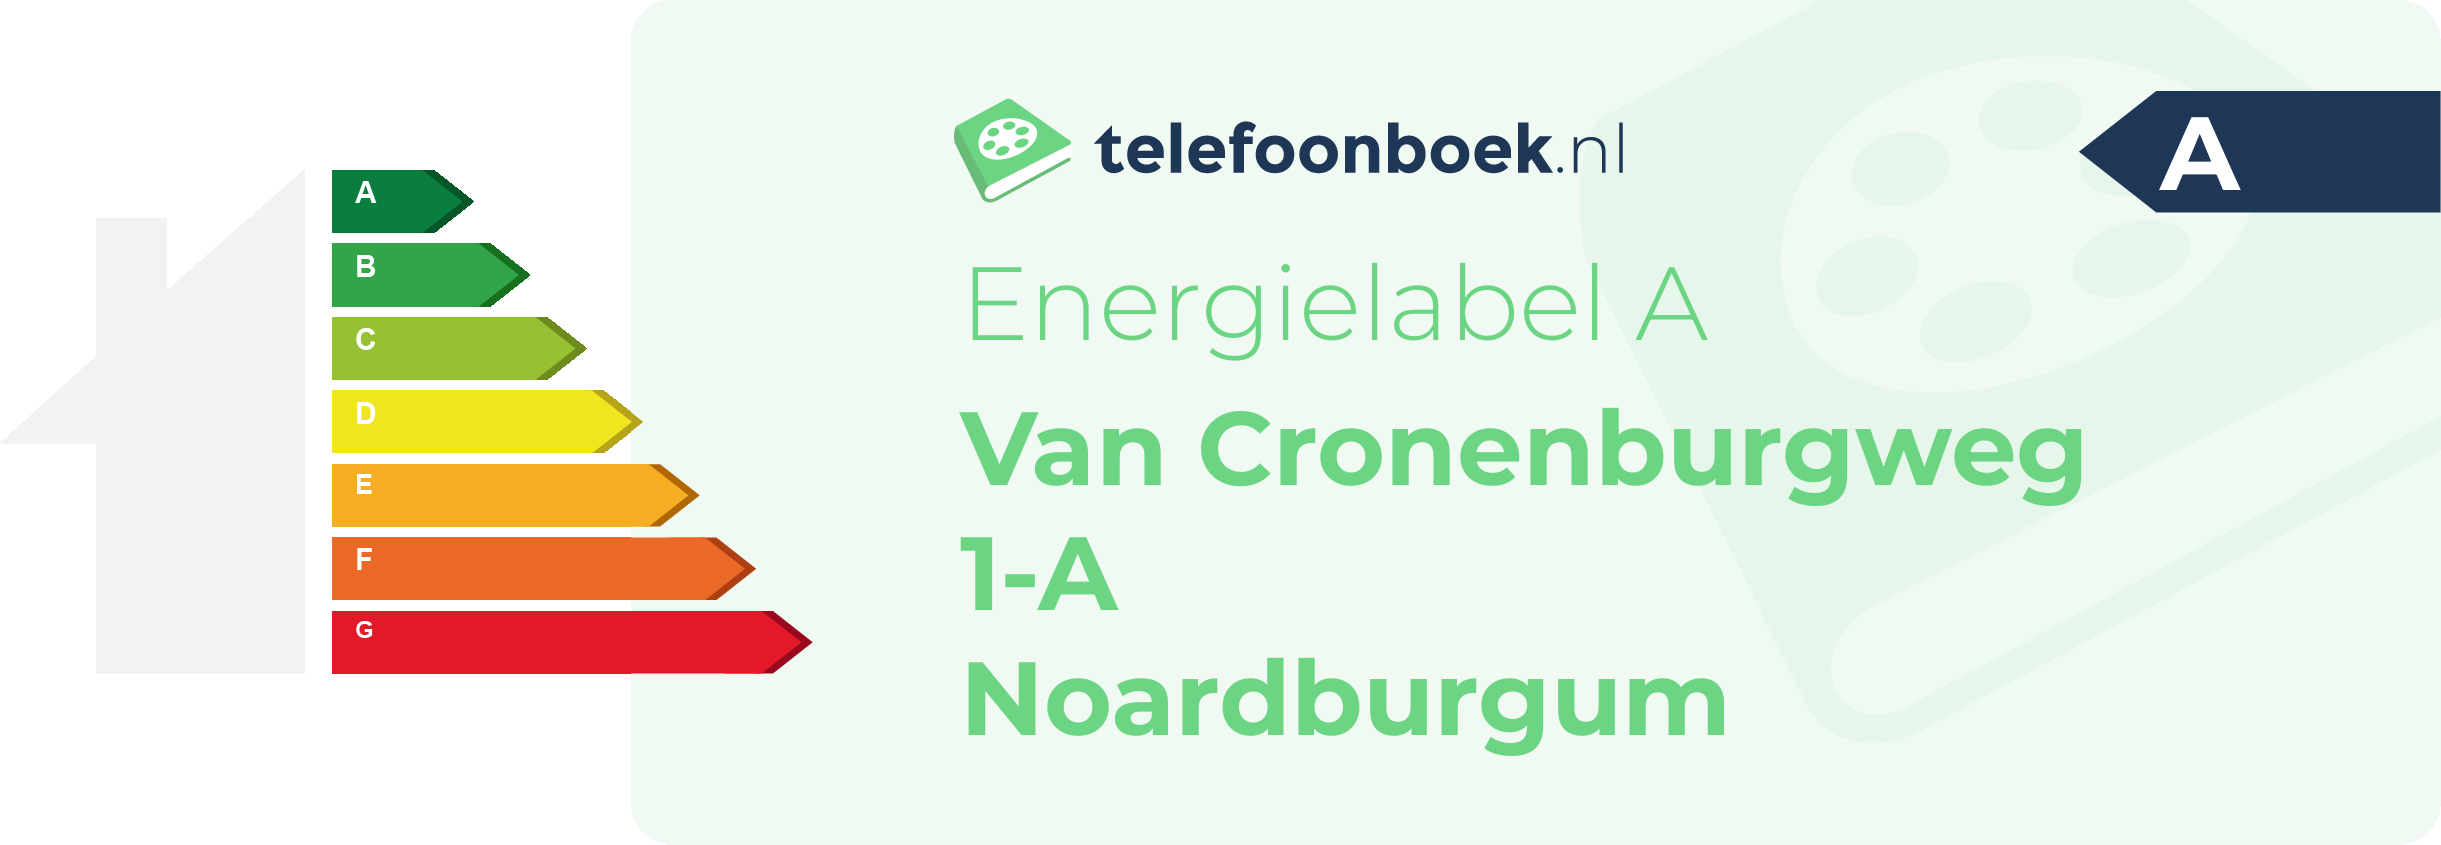 Energielabel Van Cronenburgweg 1-A Noardburgum